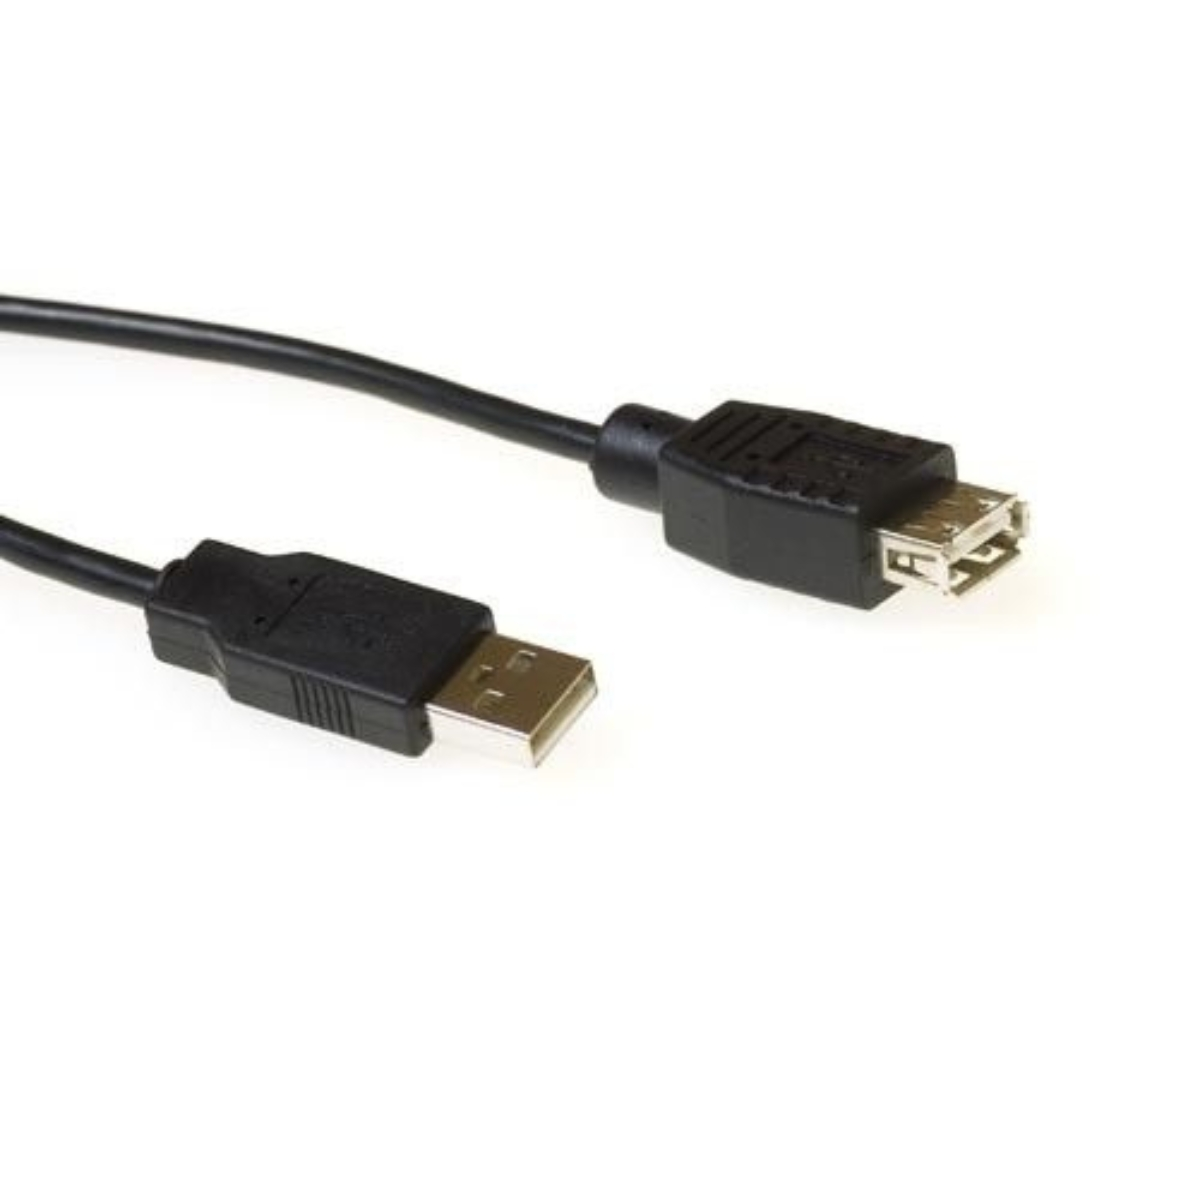 ACT SB2230 USB Kabel